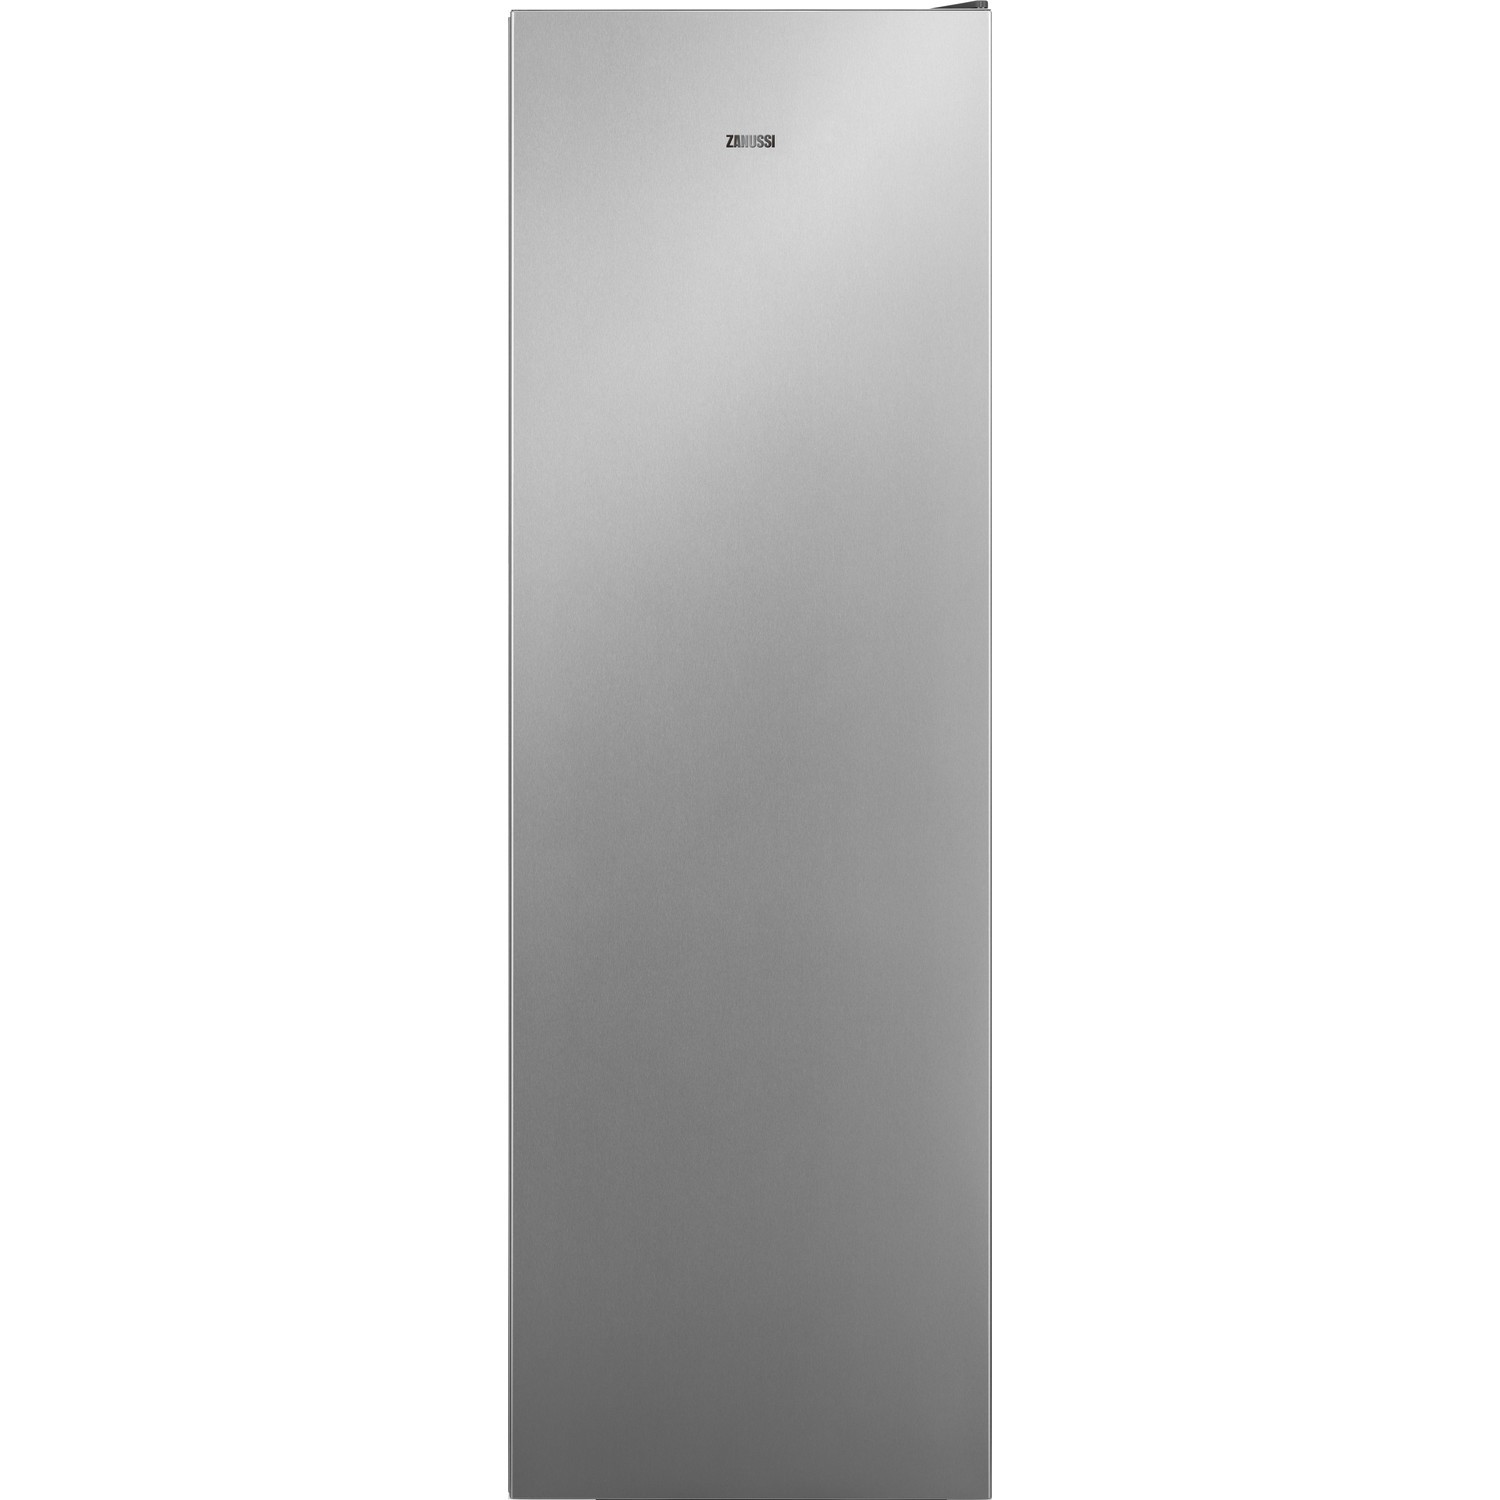 Refurbished Zanussi ZUHE30FU2 Freestanding 280 Litre Tall Freezer Stainless Steel Look